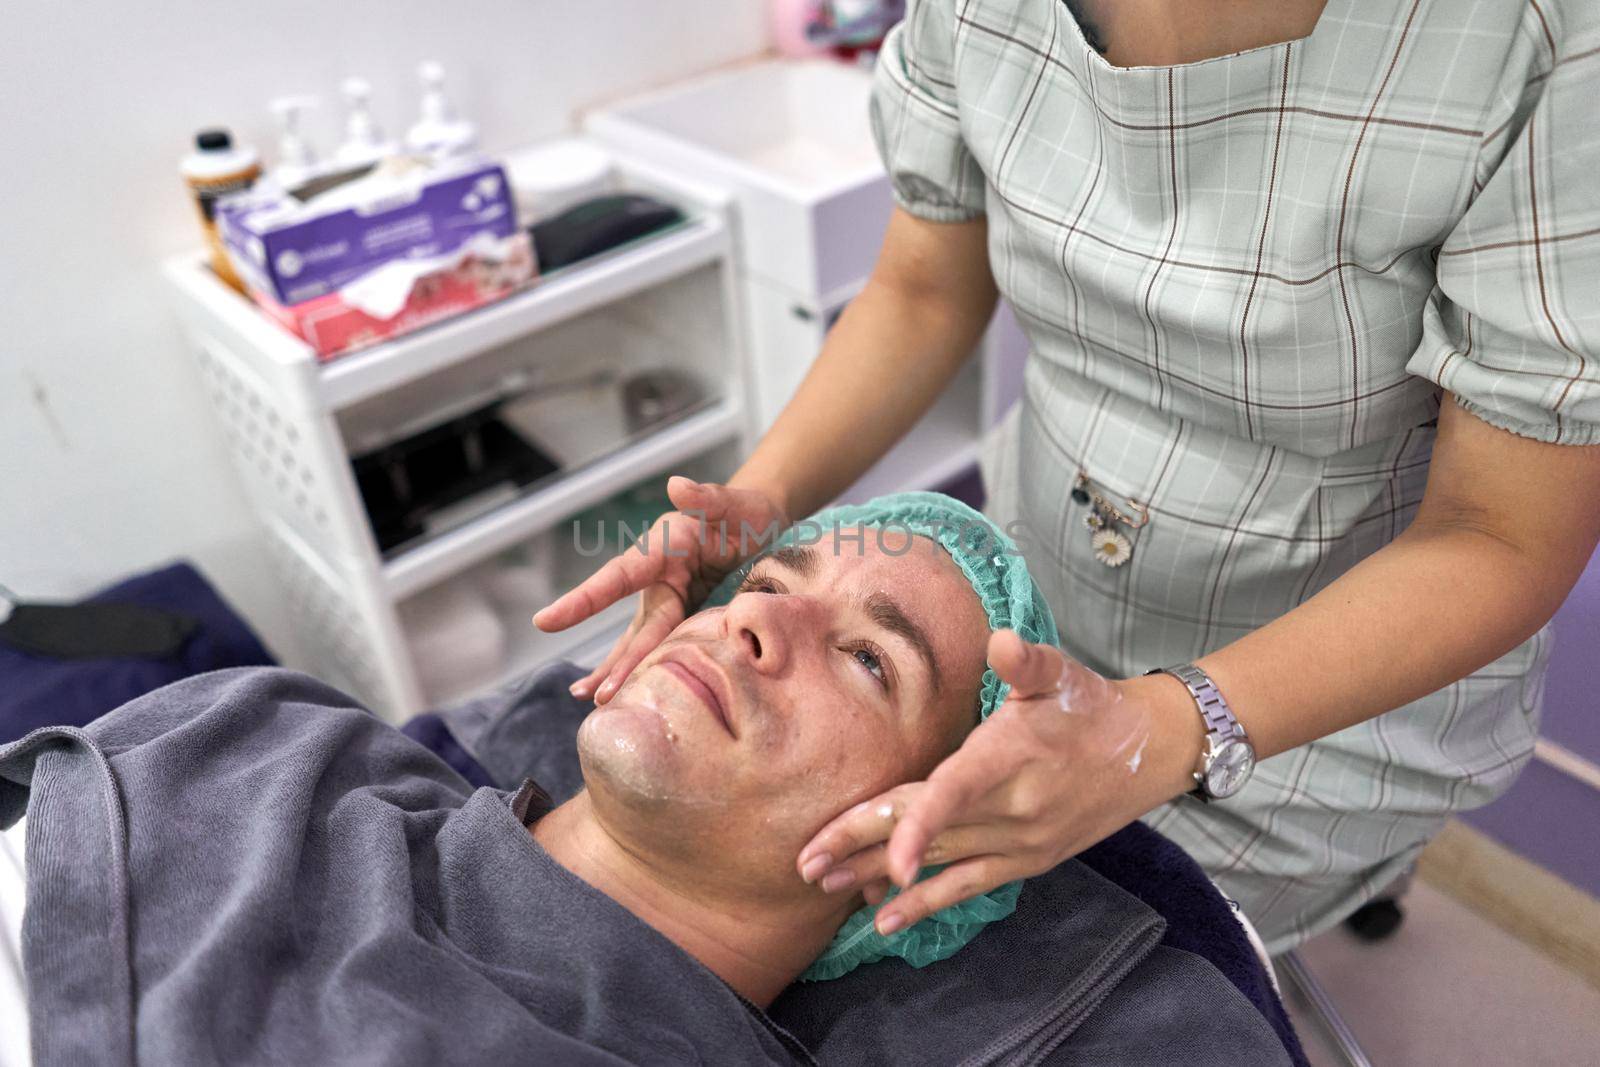 A nurse's hands massaging a patient's face before receiving a facial beauty treatment in a clinic